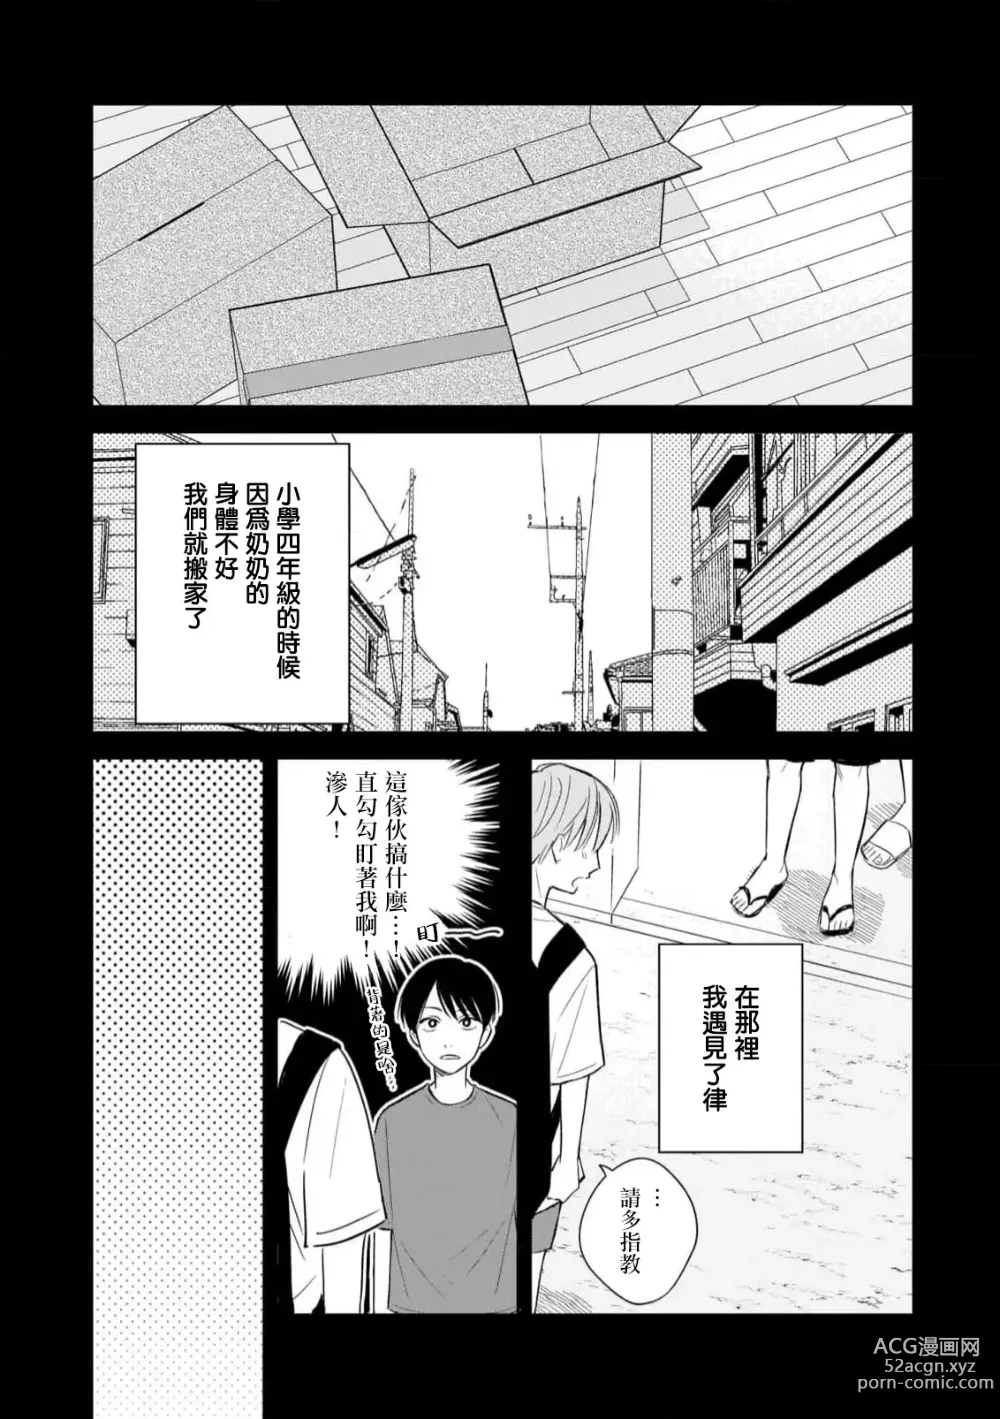 Page 4 of manga 无敌的baby blue #03